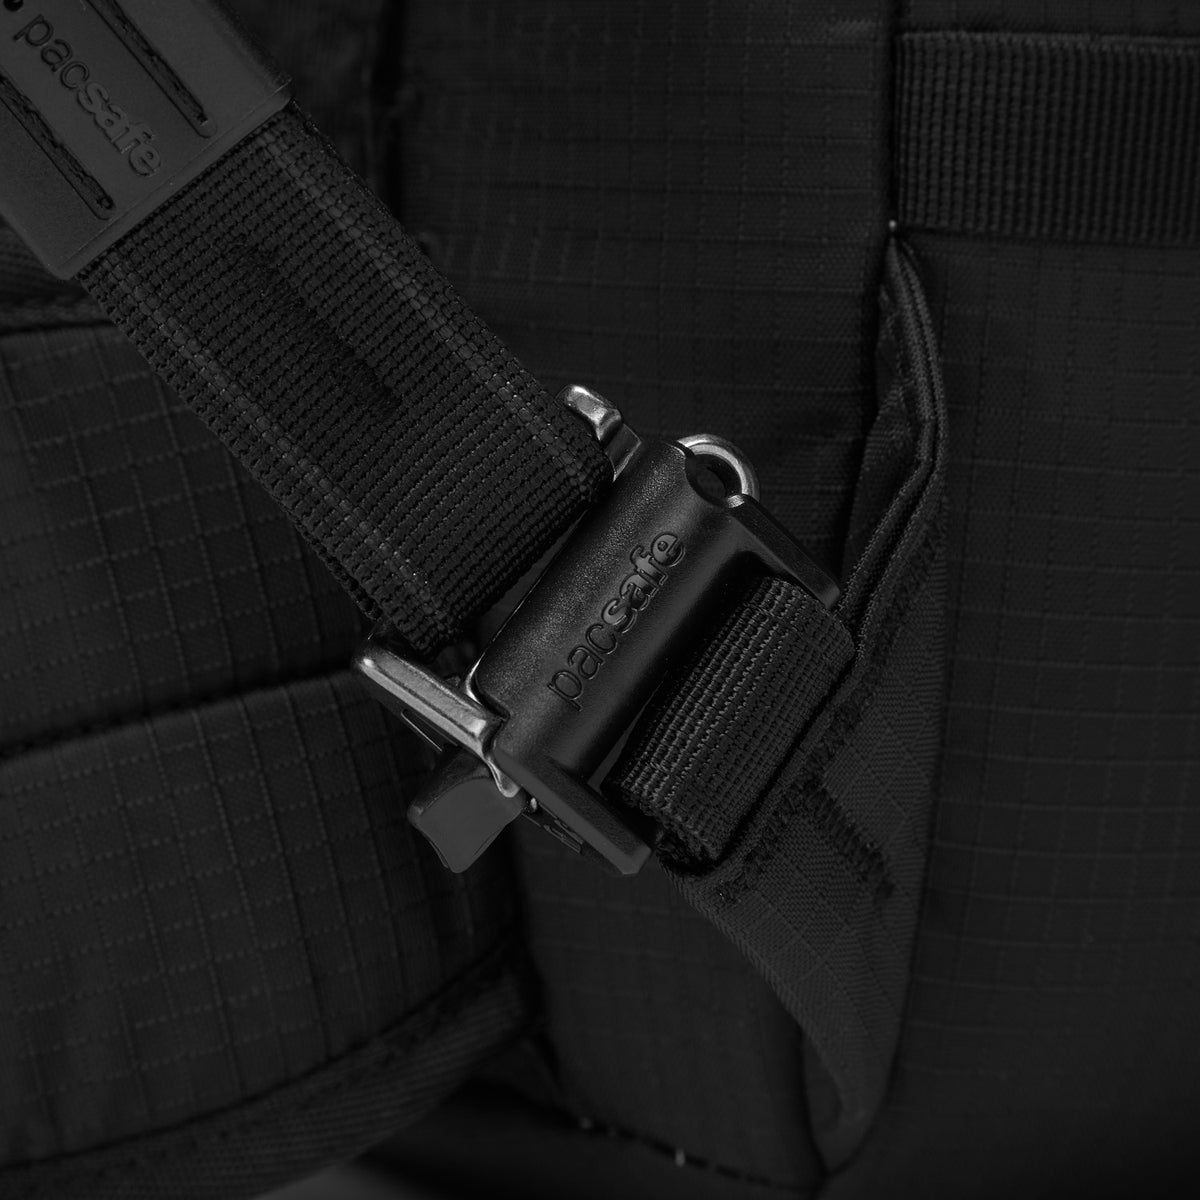 Pacsafe® Vibe 40L anti-theft carry-on backpack | Pacsafe® - Pacsafe ...